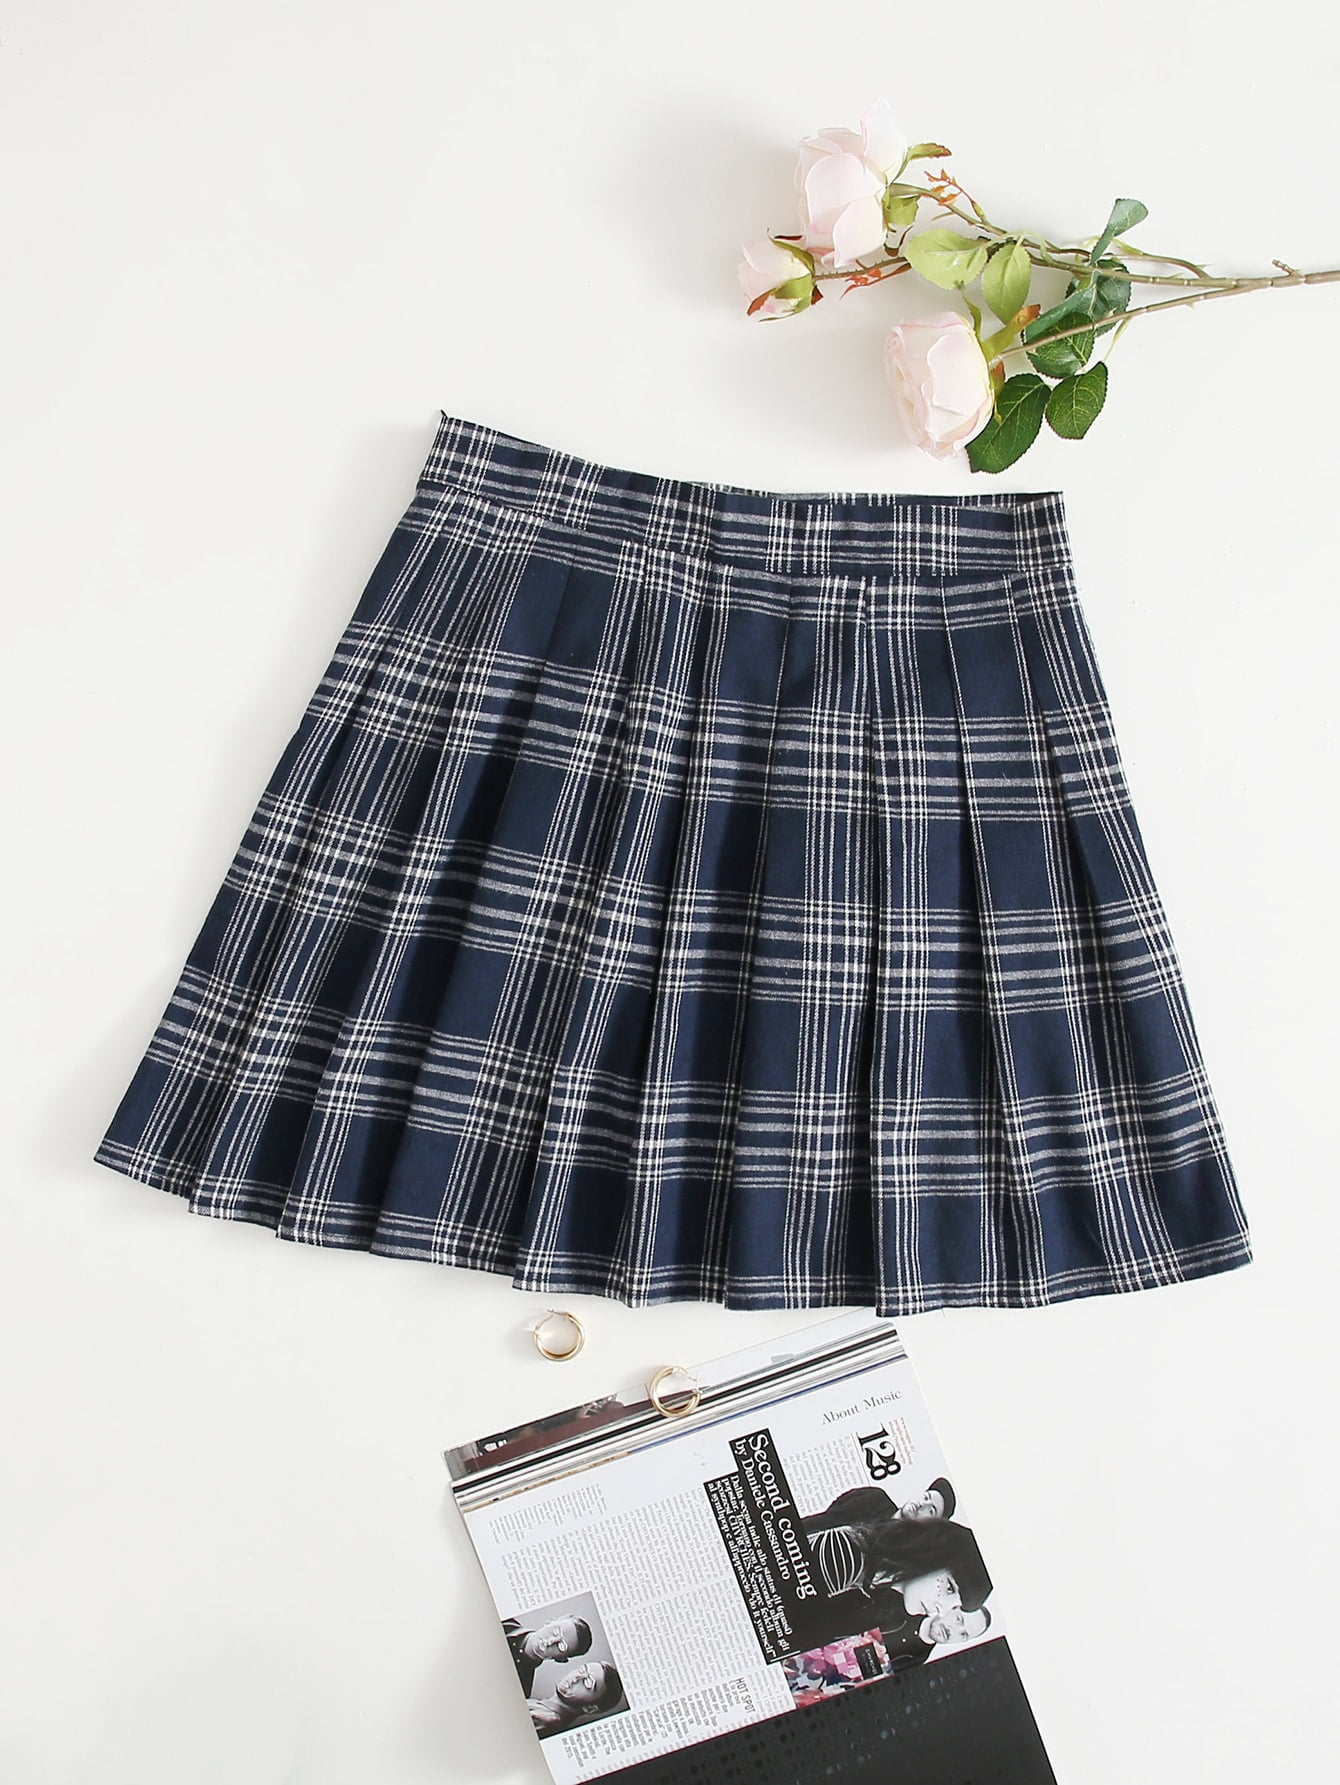 NAVYBLUEWomen Lady Satin Shiny Mini Skirt Pleated Retro High Waist Club S~3XL 